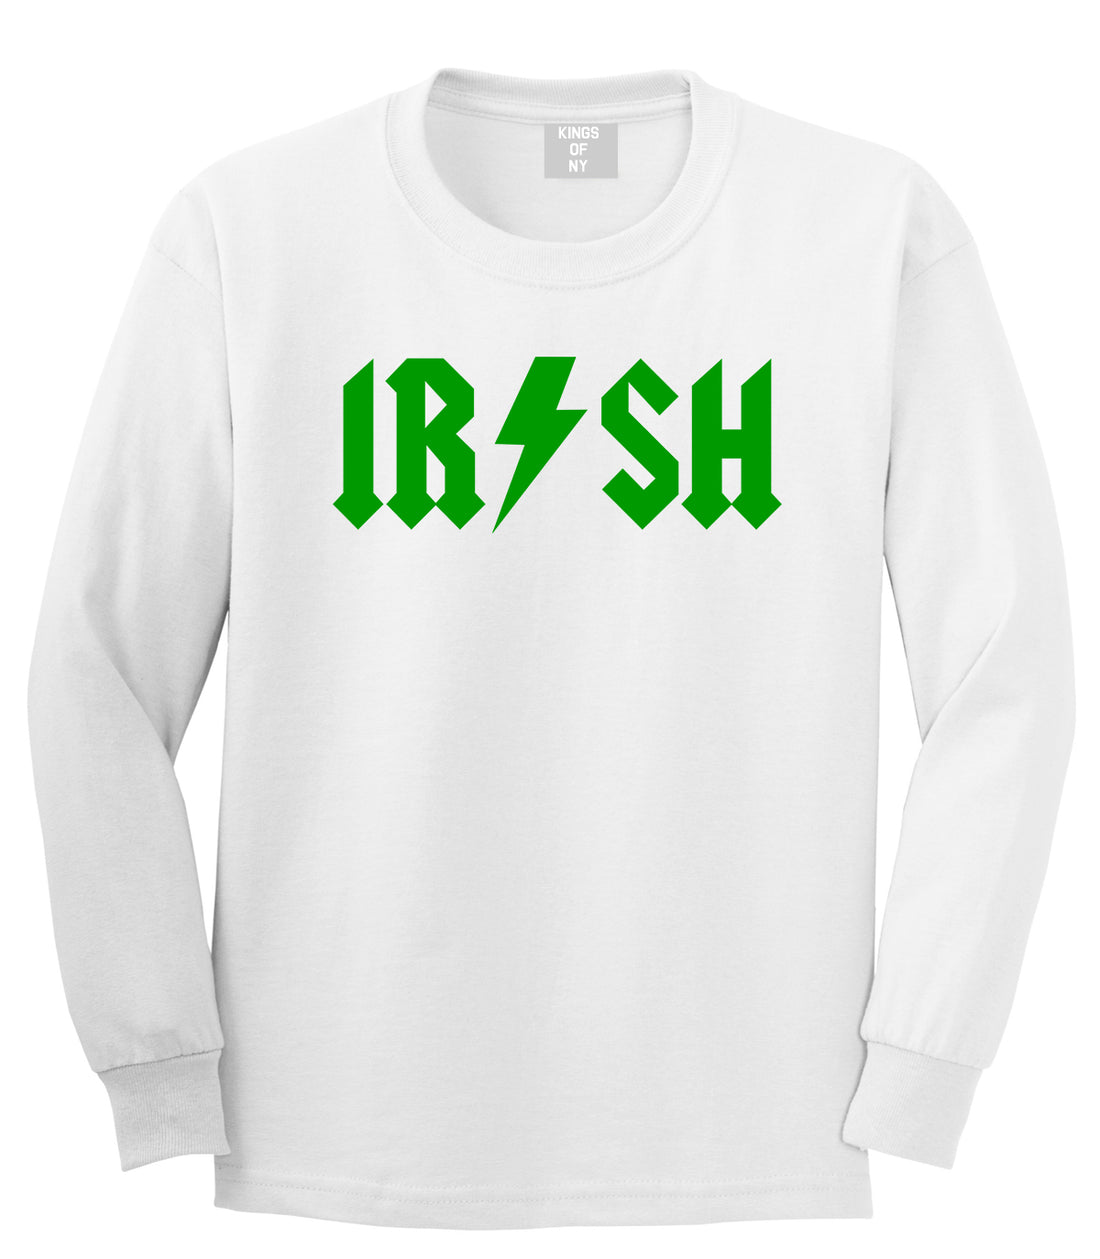 Irish Rockstar Funny Band Logo Mens Long Sleeve T-Shirt White